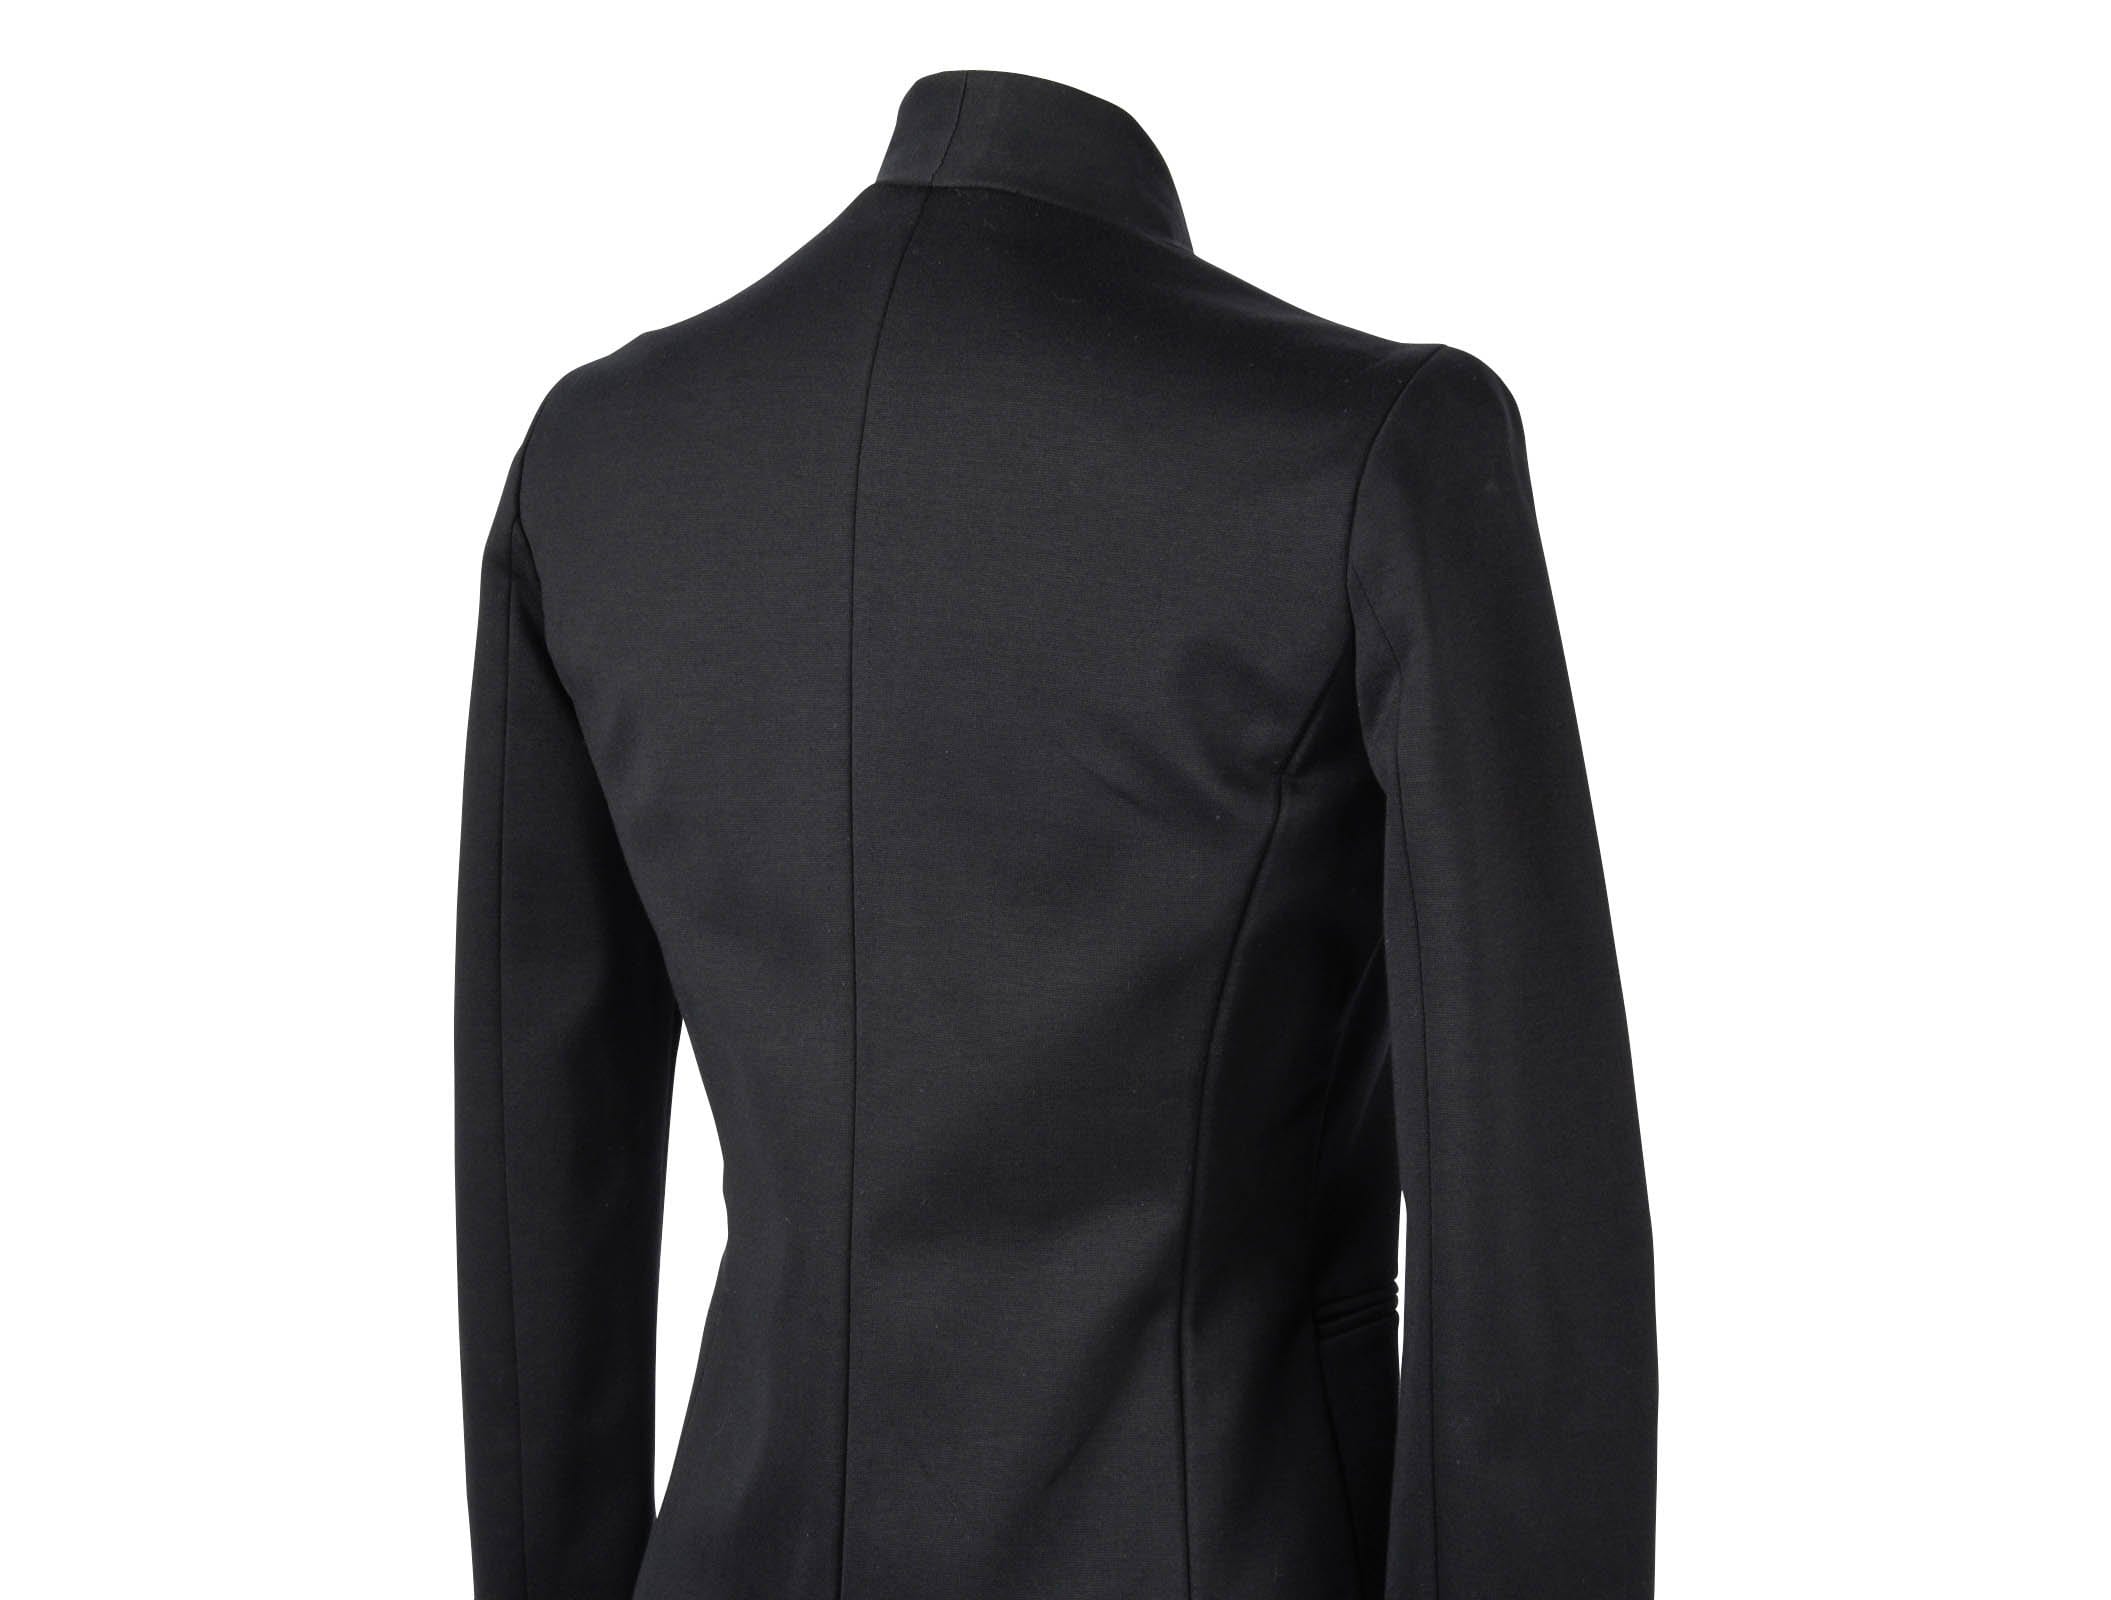 Gucci Jacket Modern Sleek Black Single Breast 38 / 6